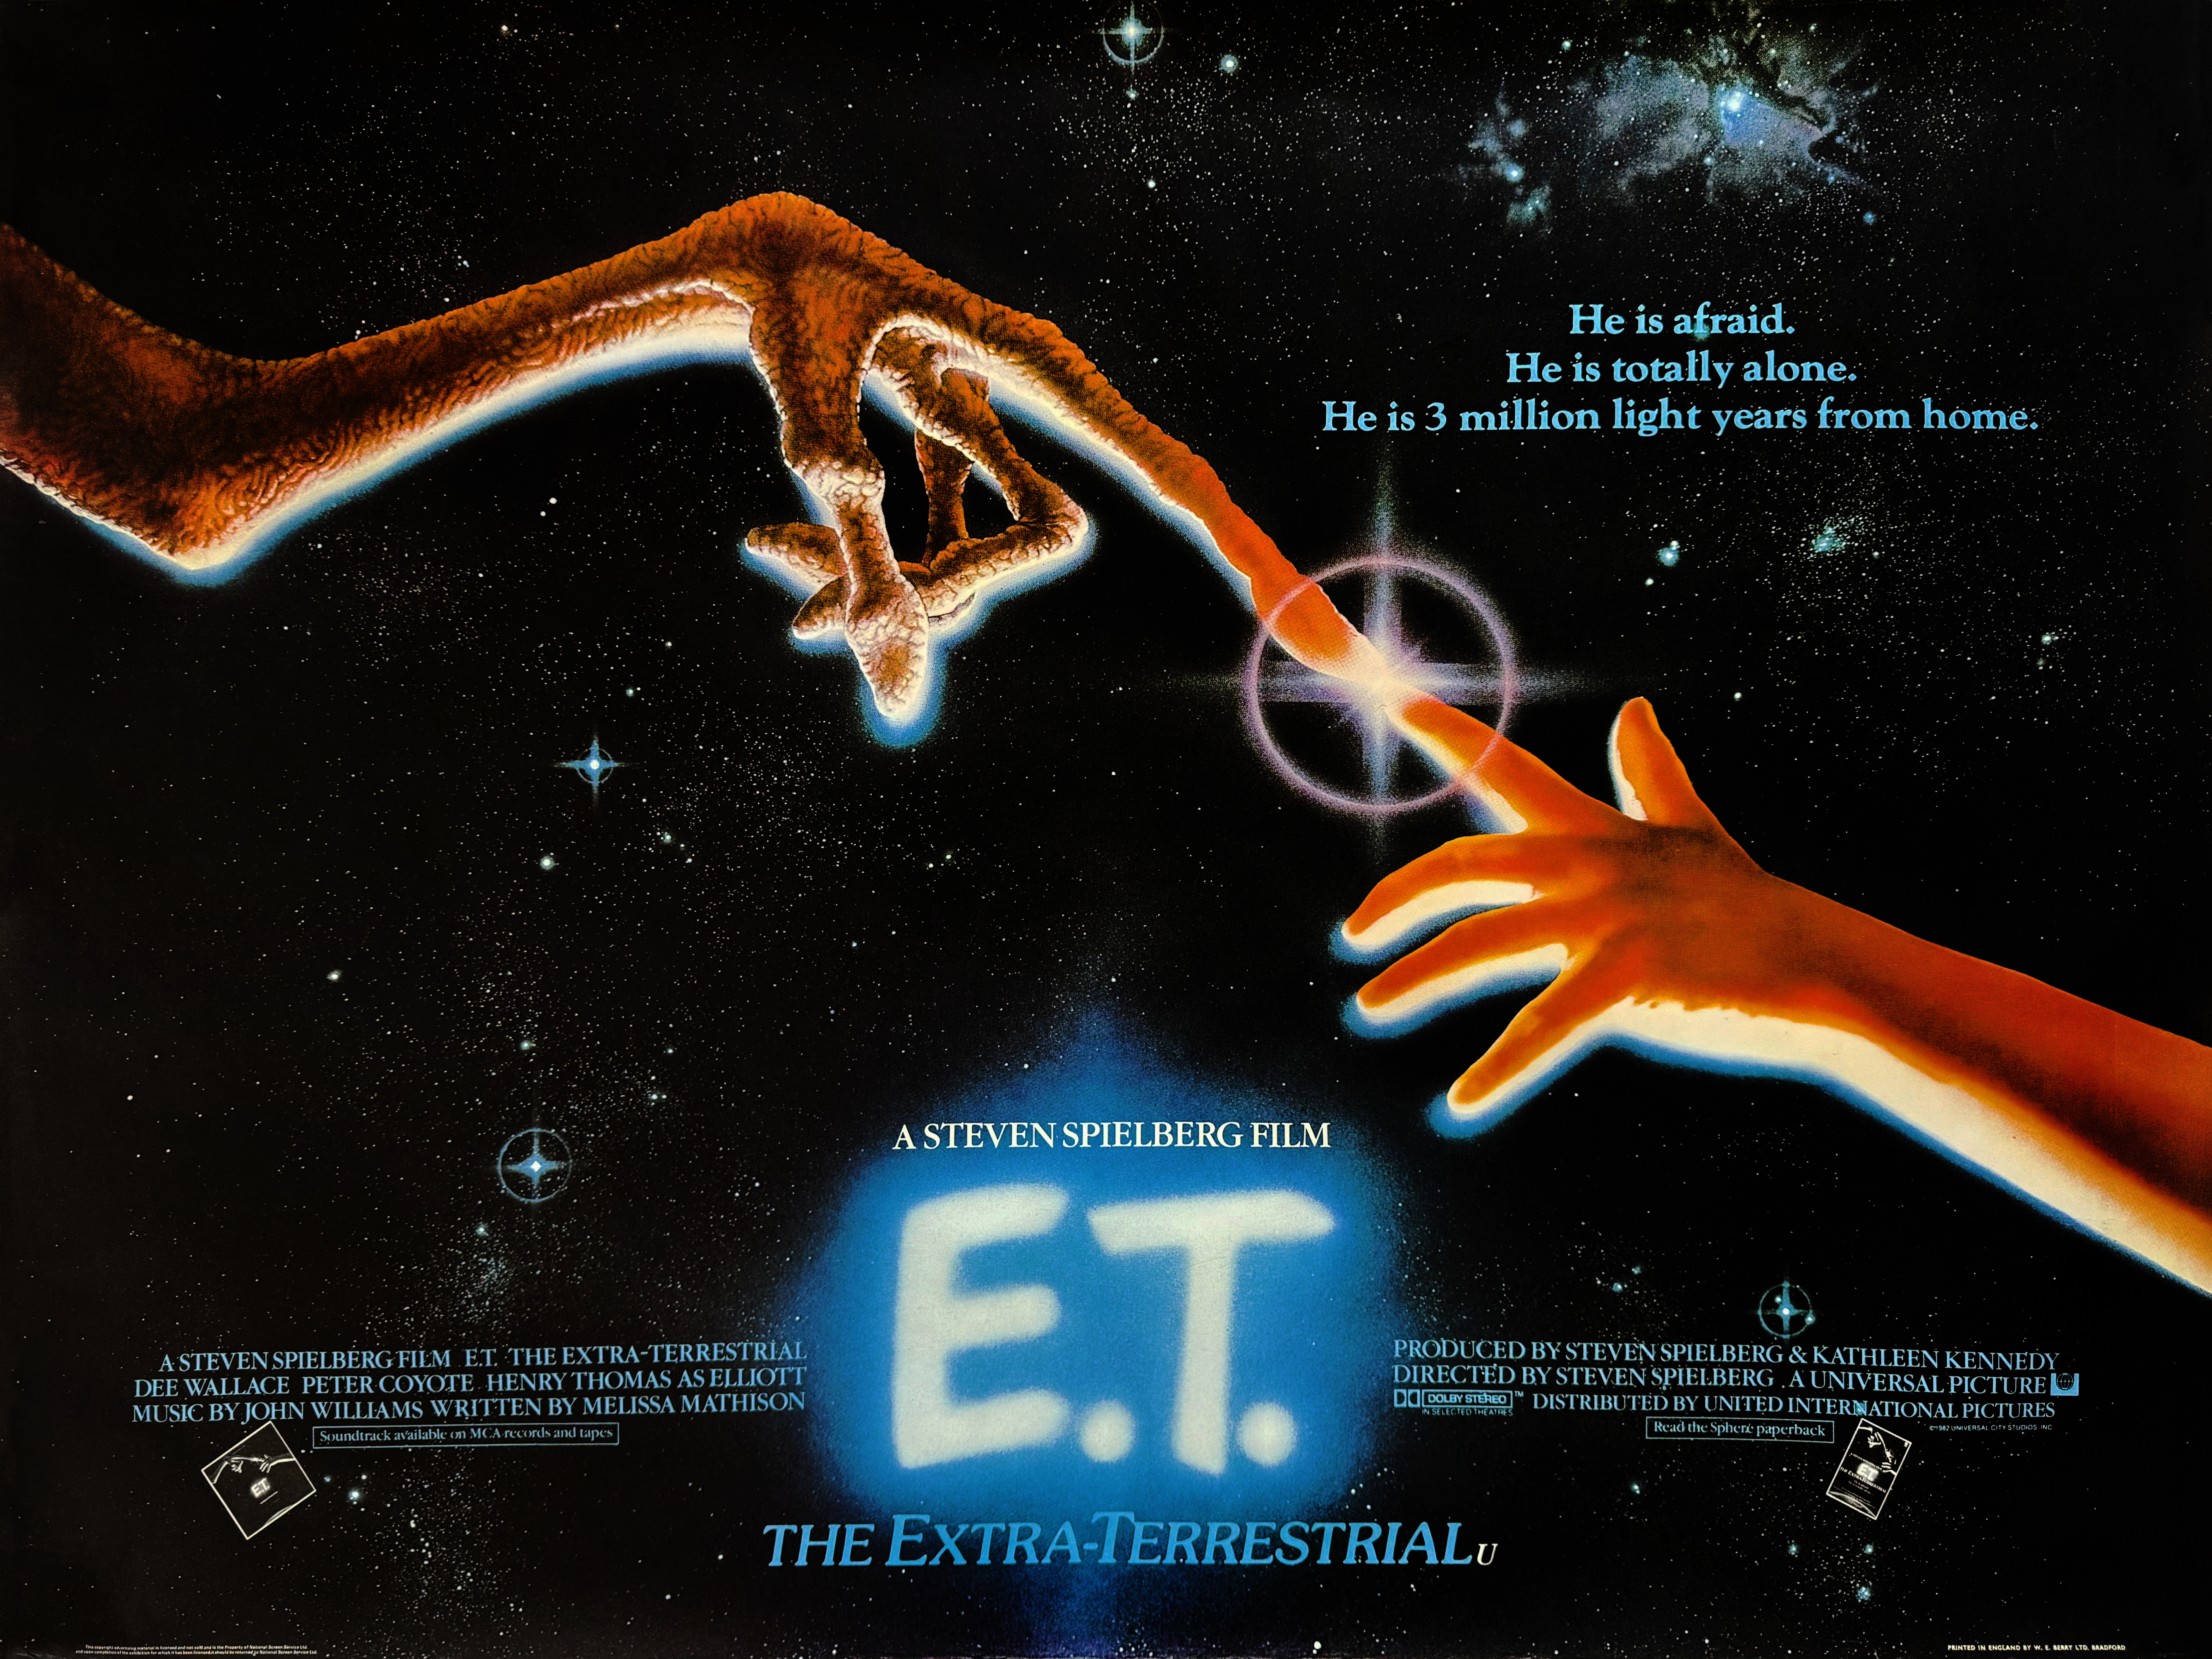 E.T. - The Extra Terresttrial - original movie quad poster